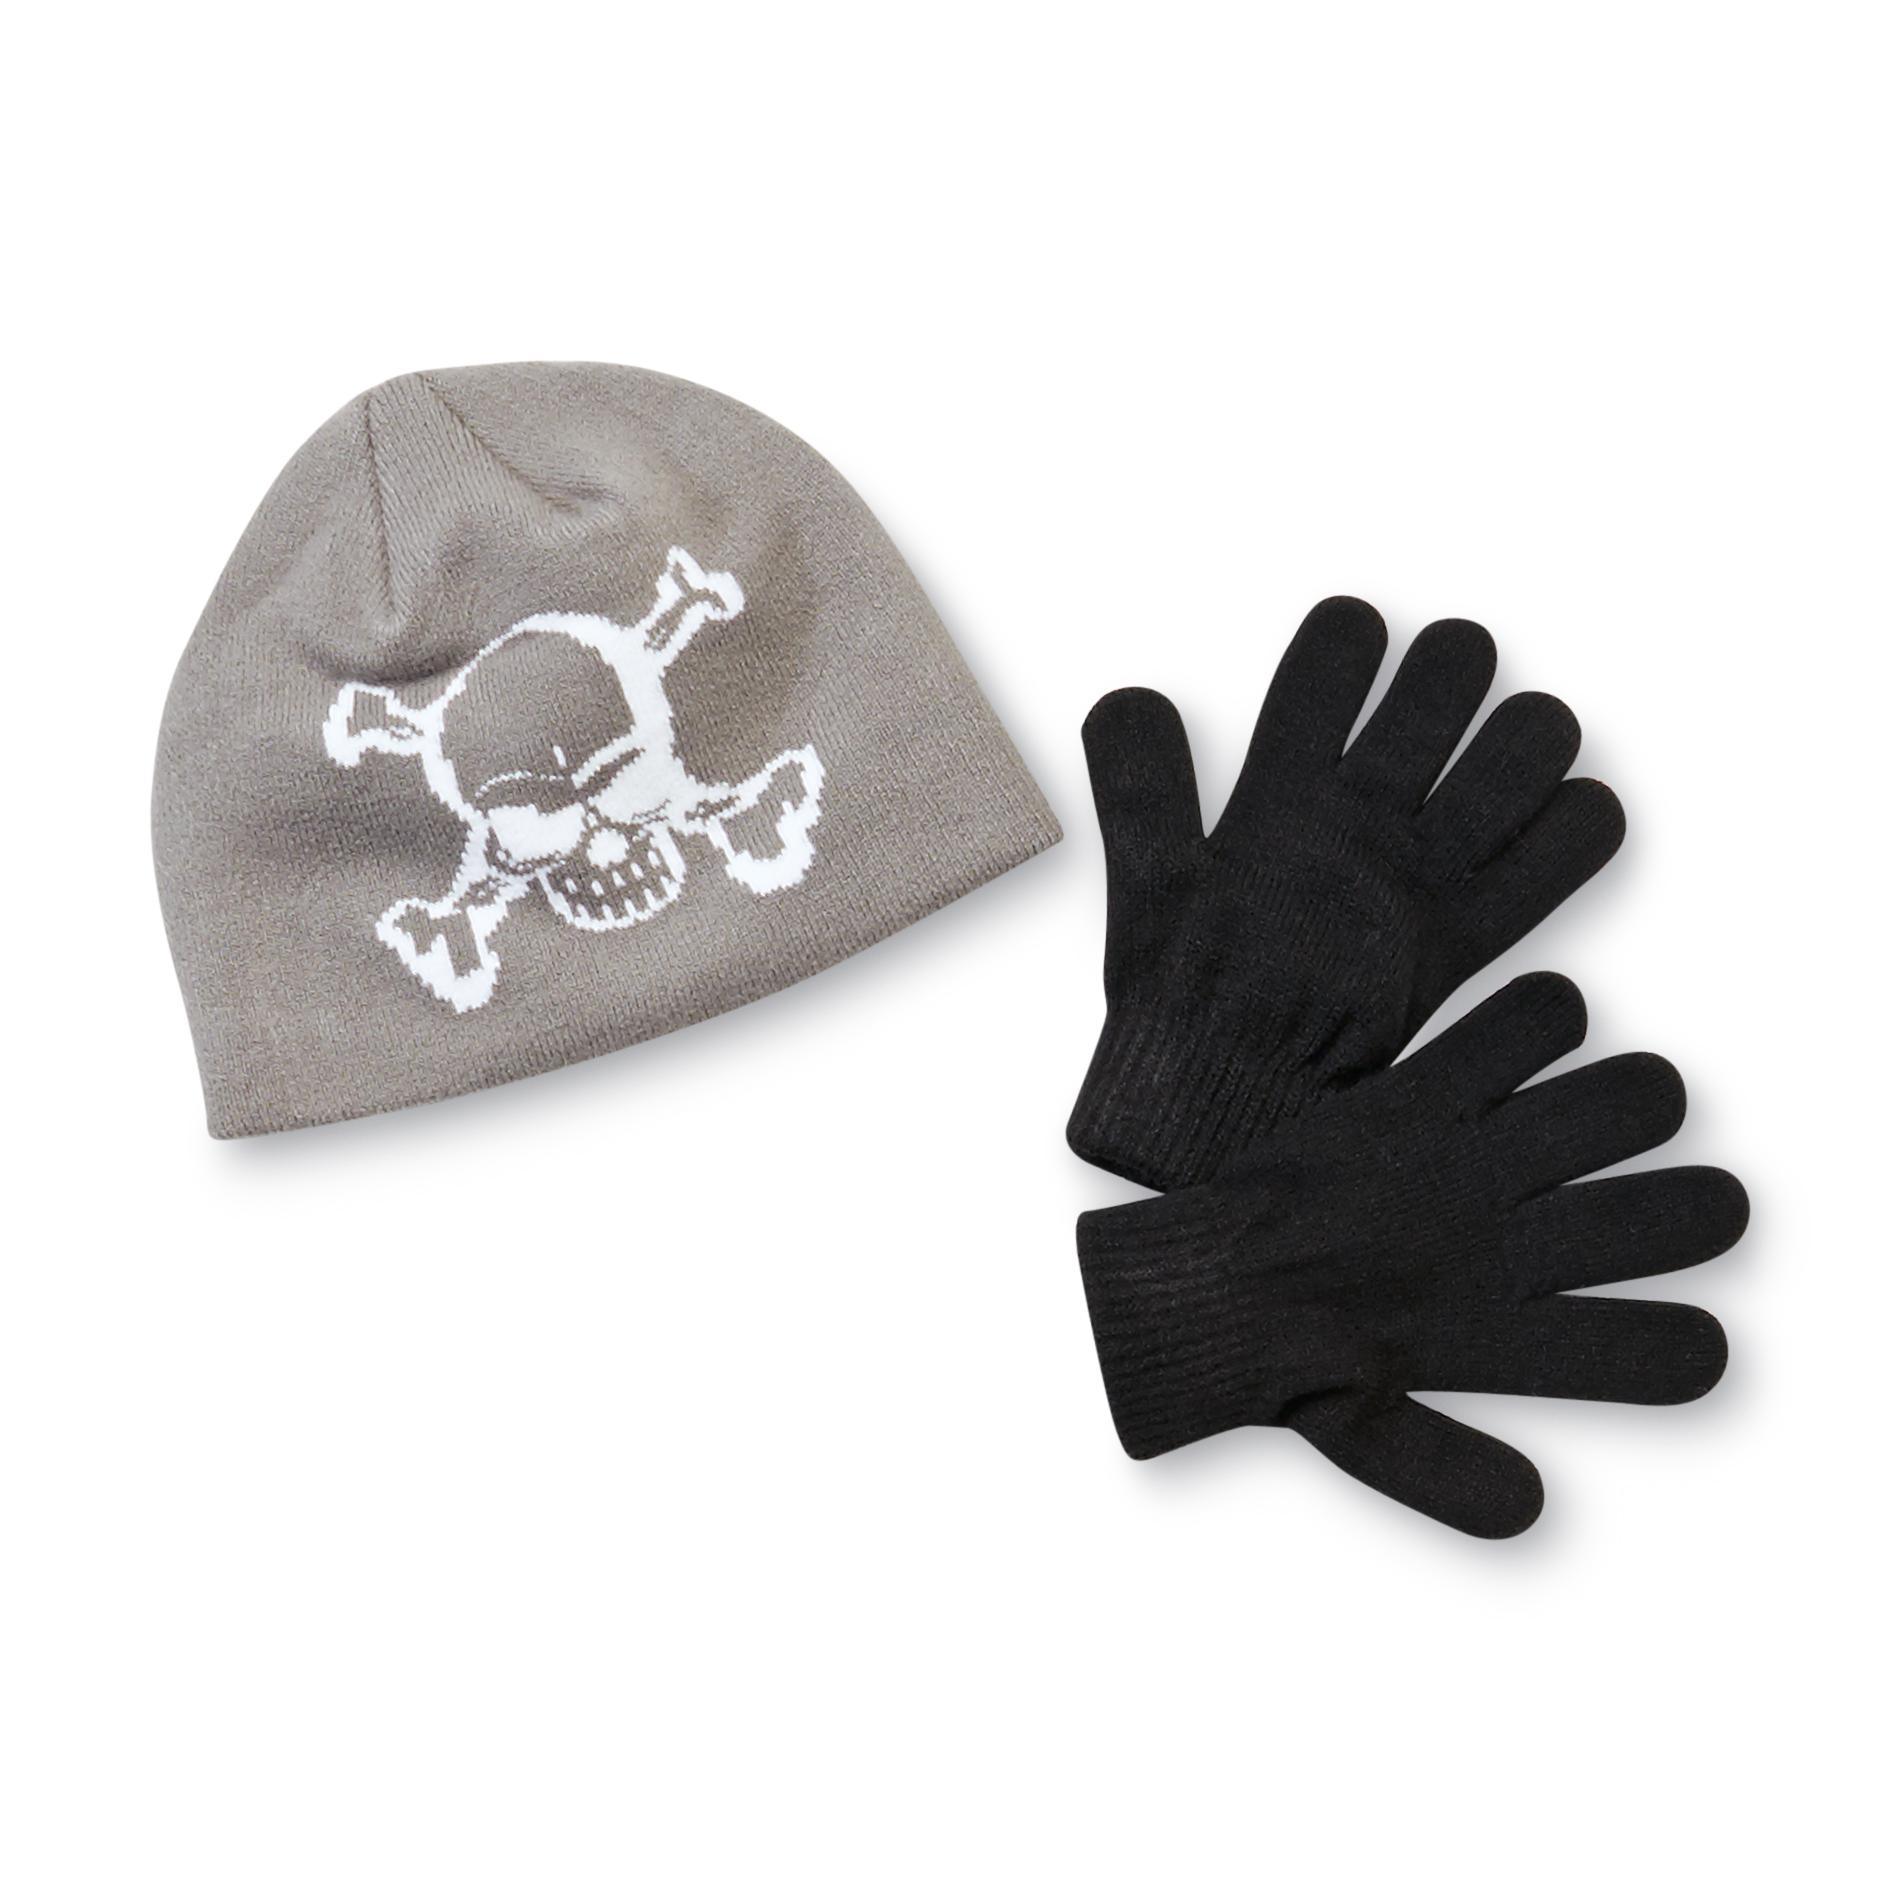 Athletech Boy's Knit Beanie Hat & Gloves - Skull